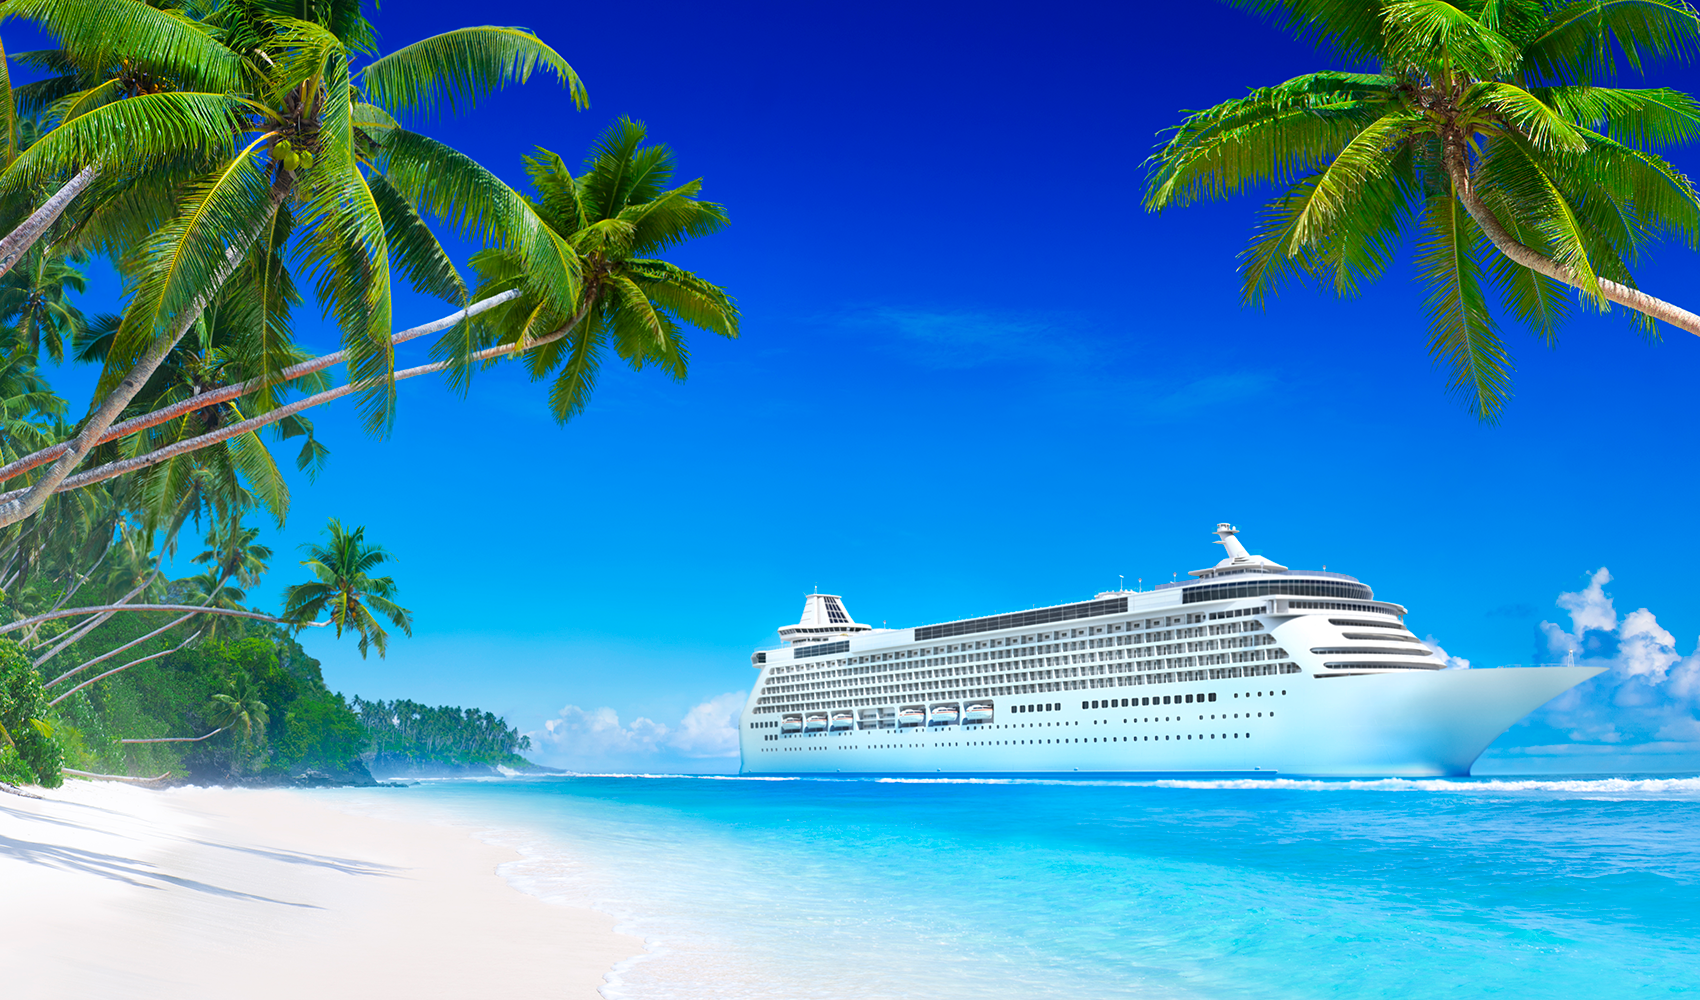 cruise ship by tropical island shore